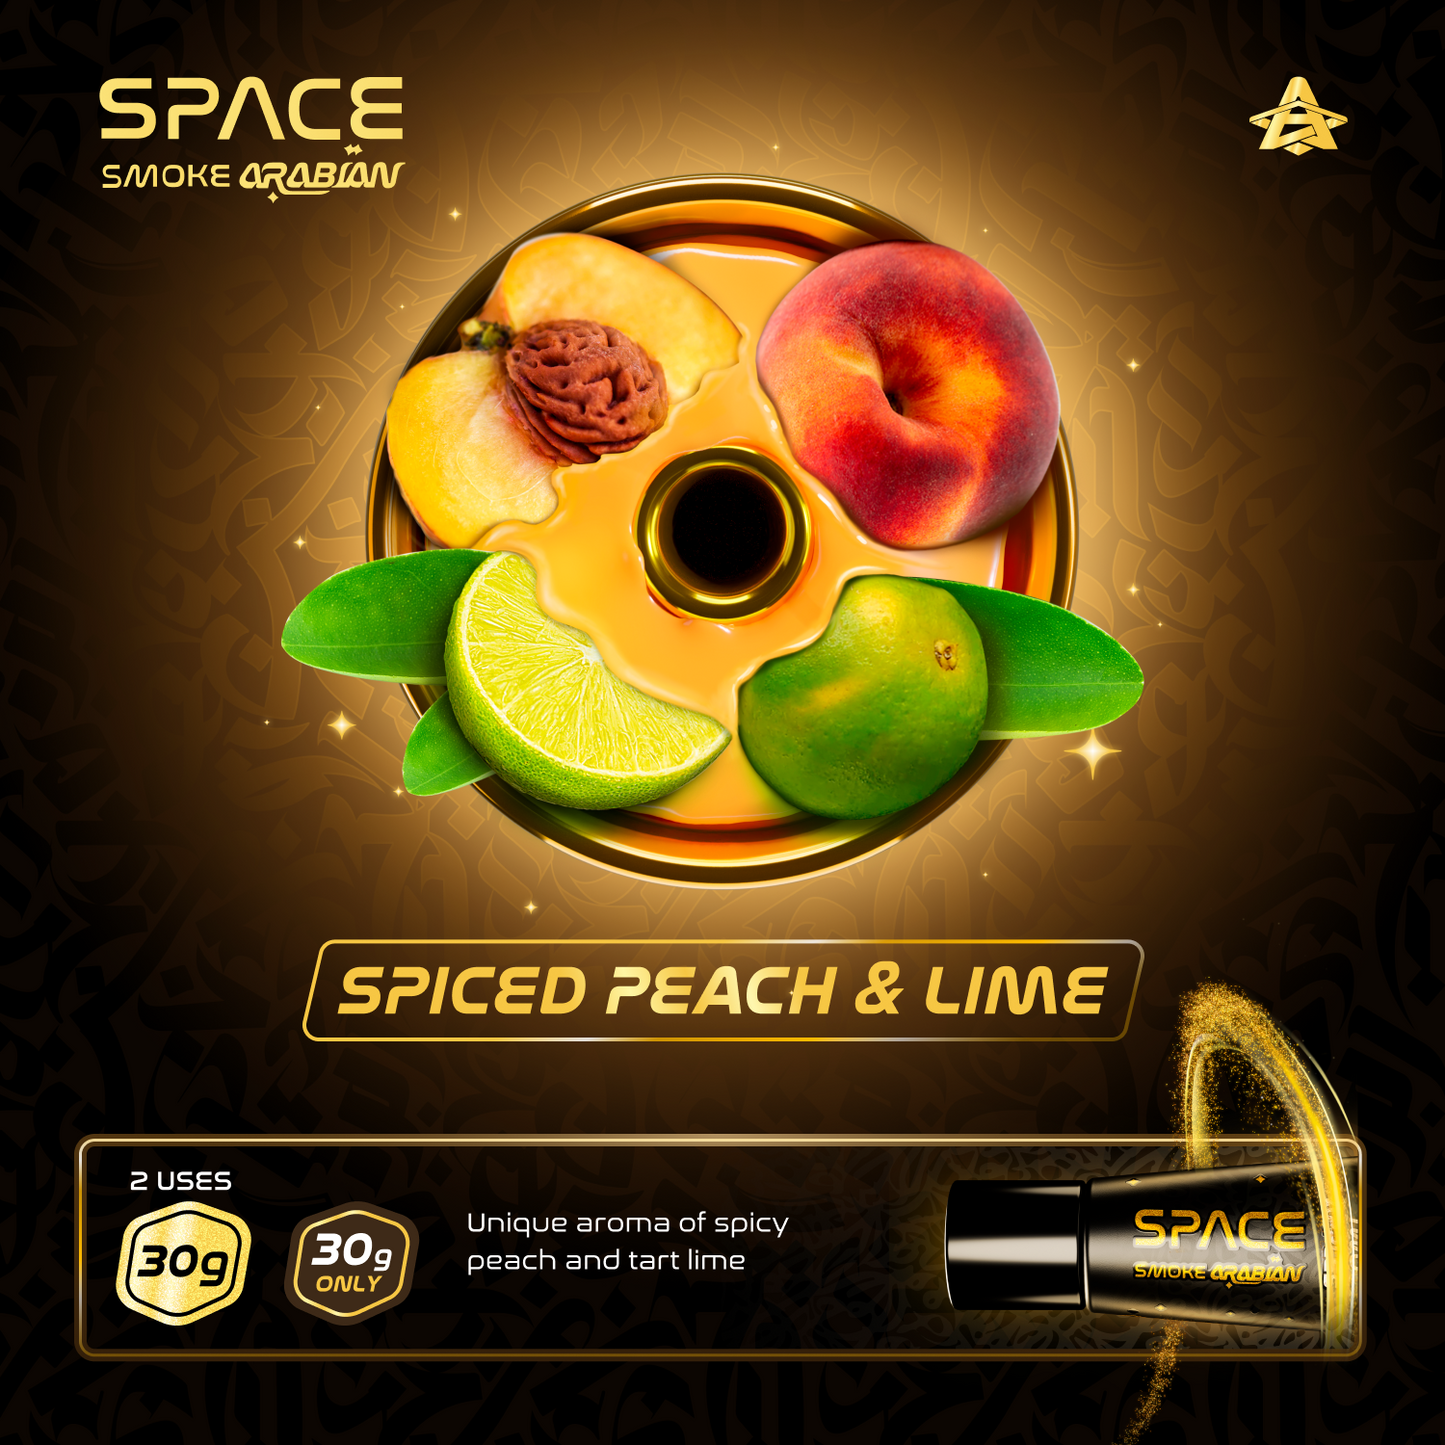 Space Smoke Arabian Spiced Peach and Lime Hookah Paste 30g